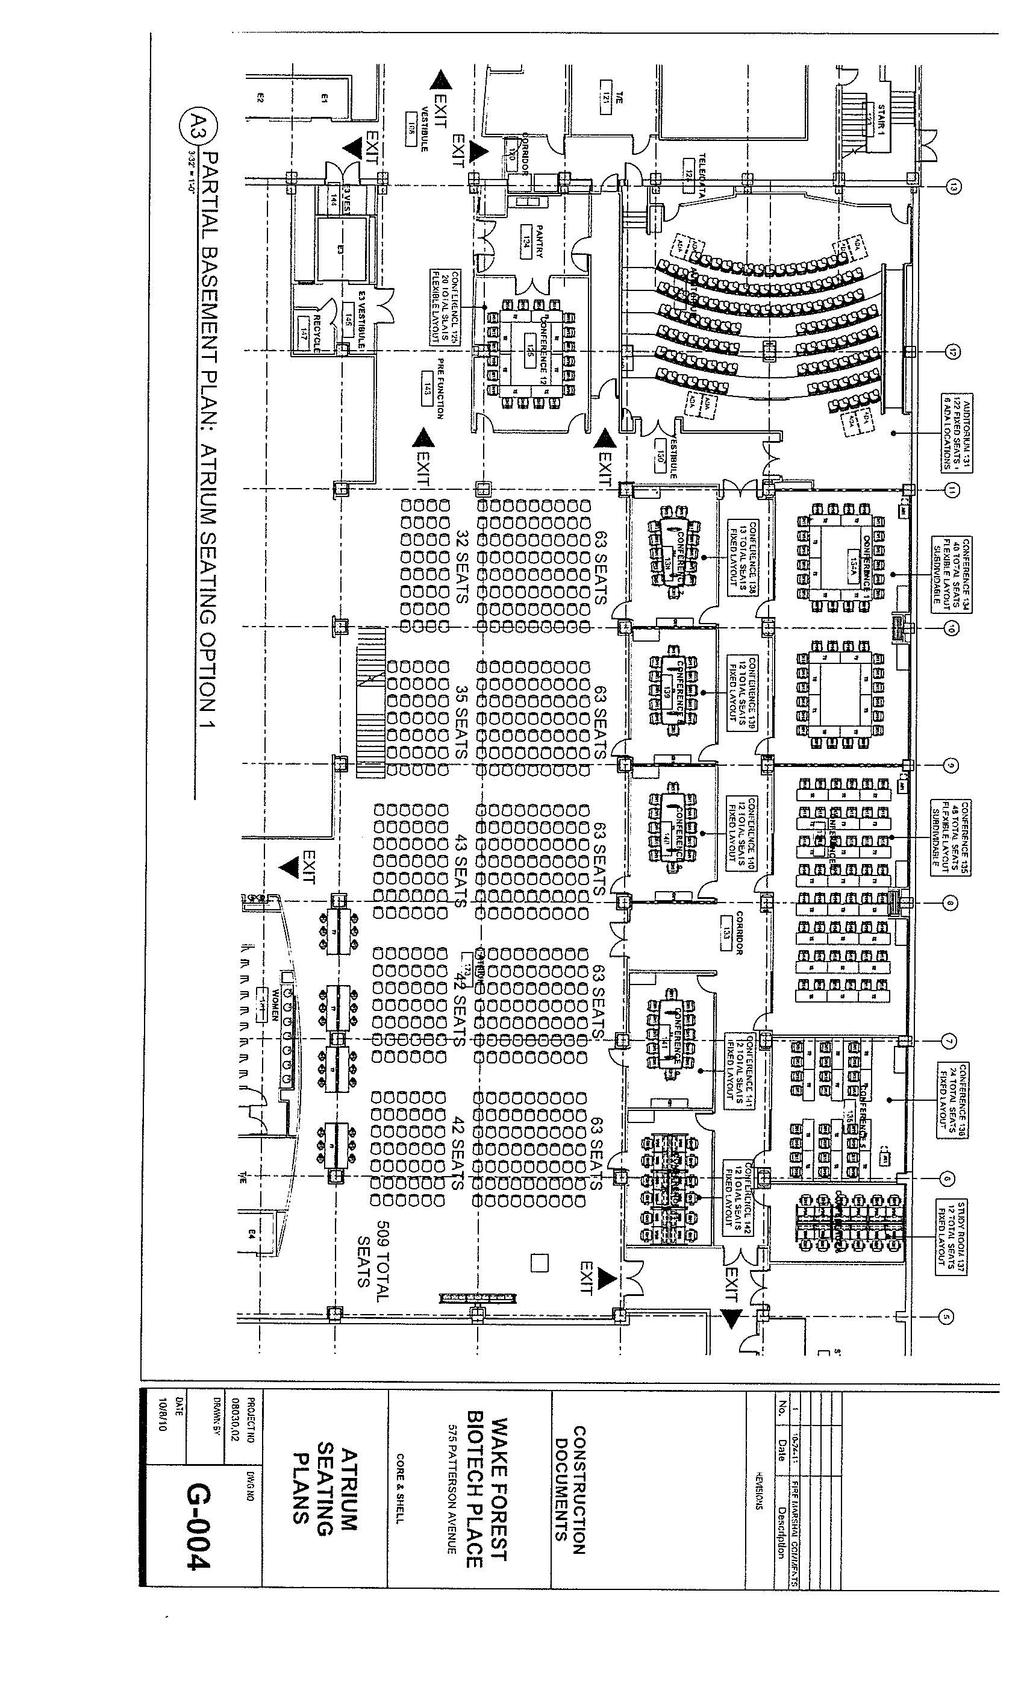 Auditorium/ Theater Style Floorplan Max Occupancy: 500 (Chairs)